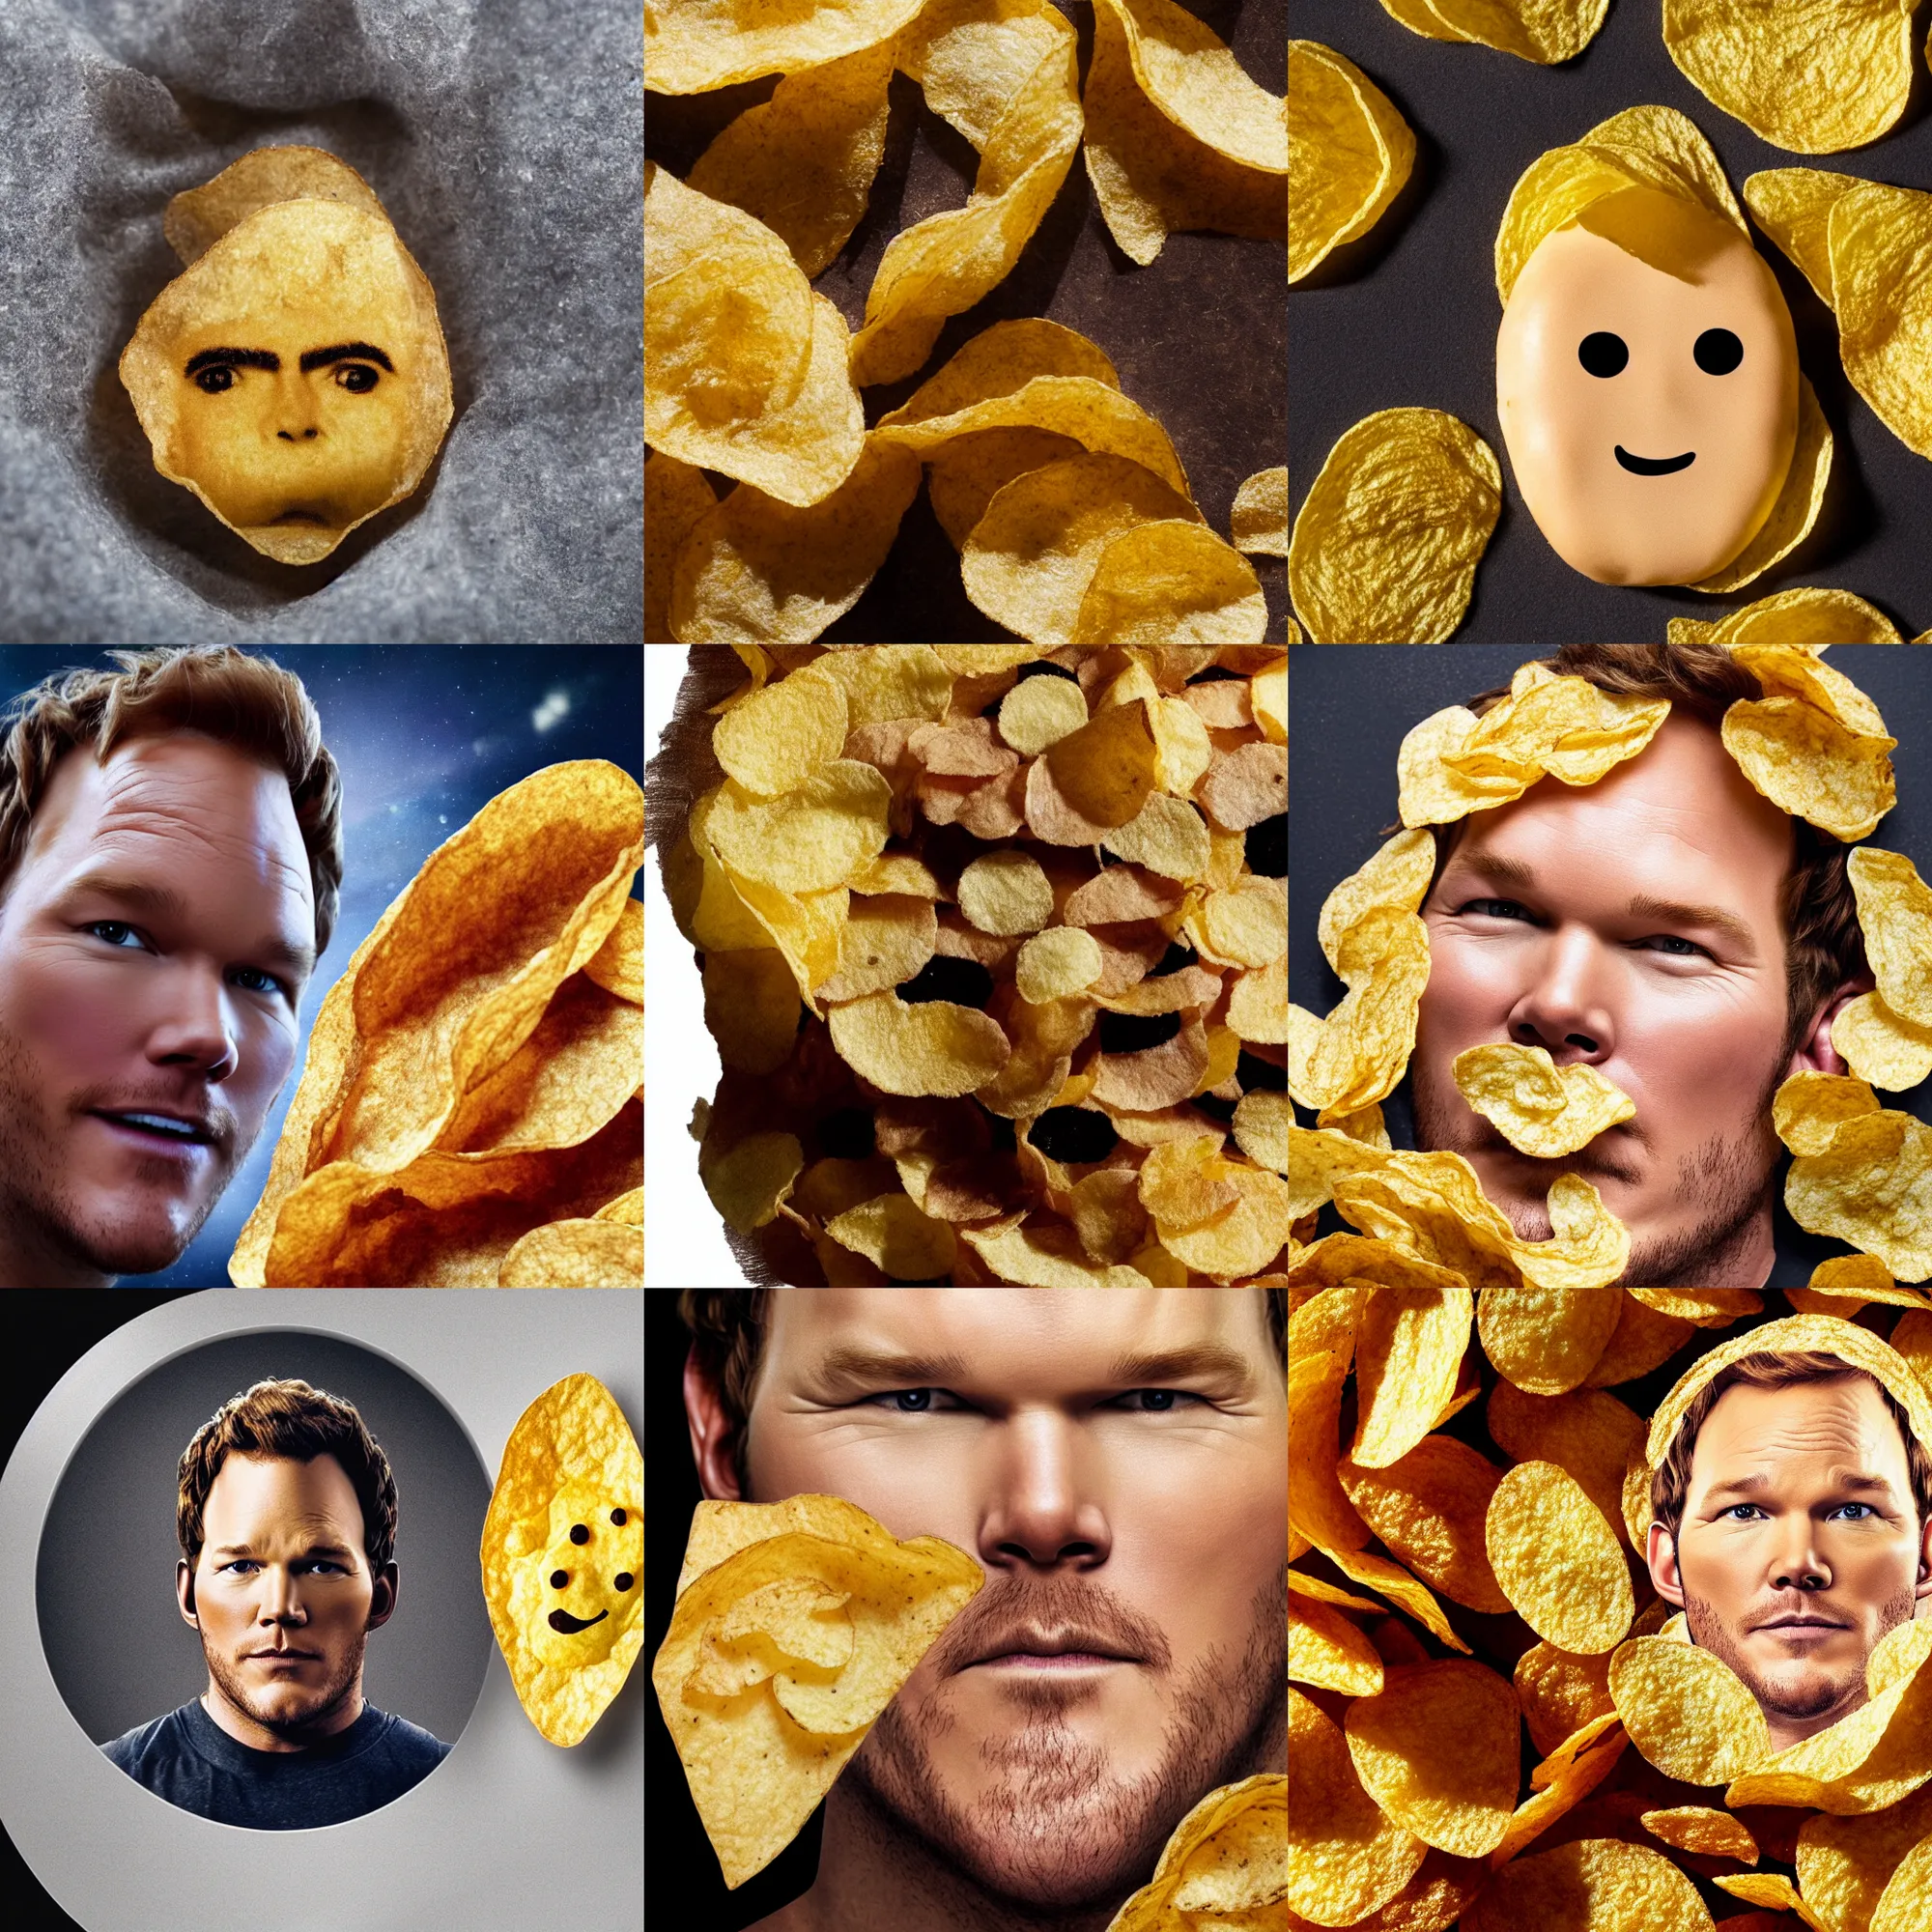 Prompt: chris pratt as a potato chip, potato chip with chris pratt's face, texture, crisp, macro shot, high detail photo, close up